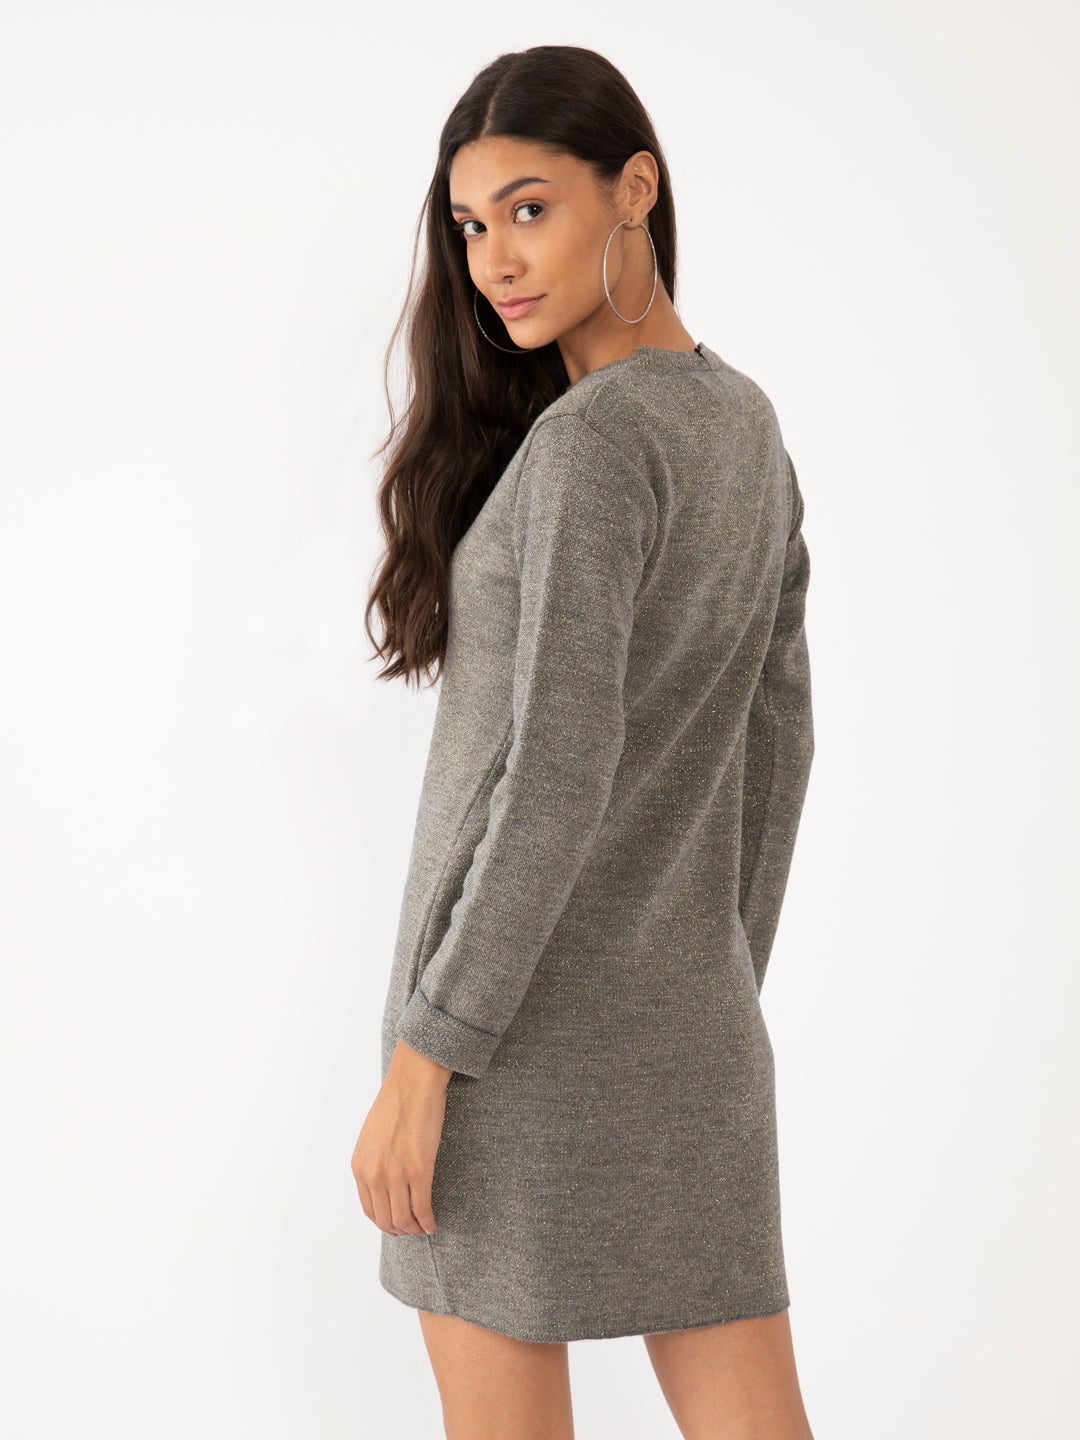 Grey Shimmer Fitted Short Dress For Women